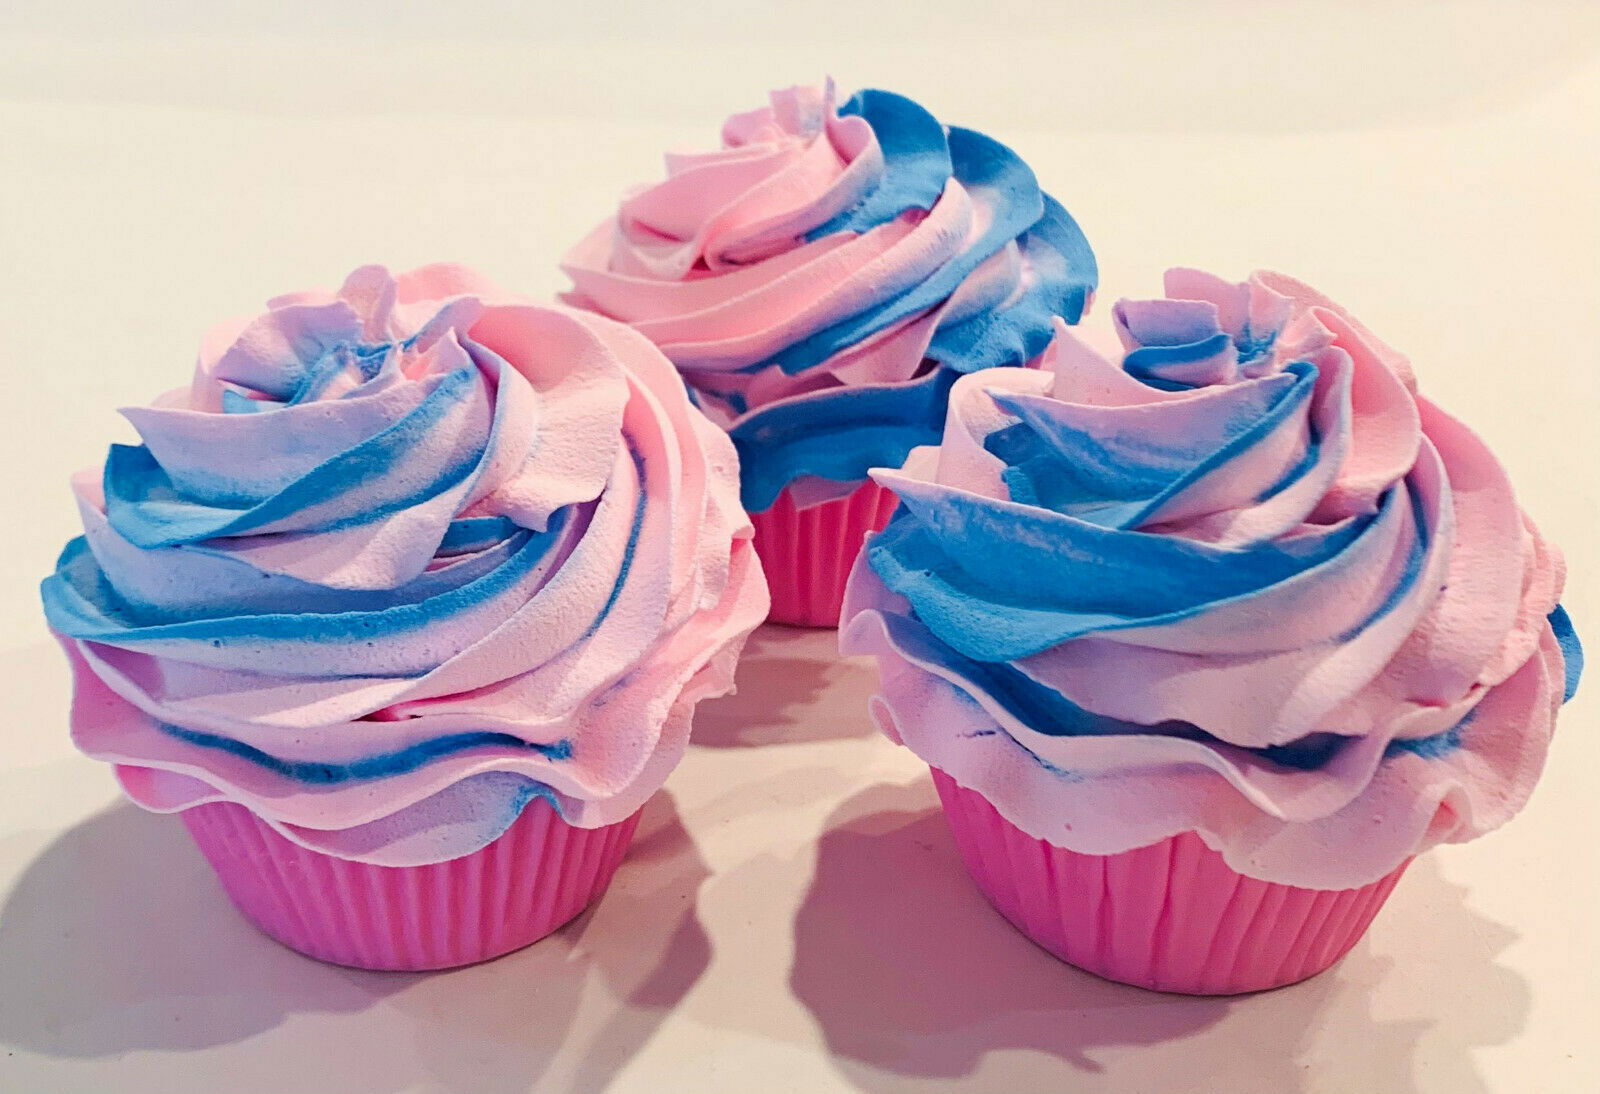 Cupcakes - Mixed Swirl